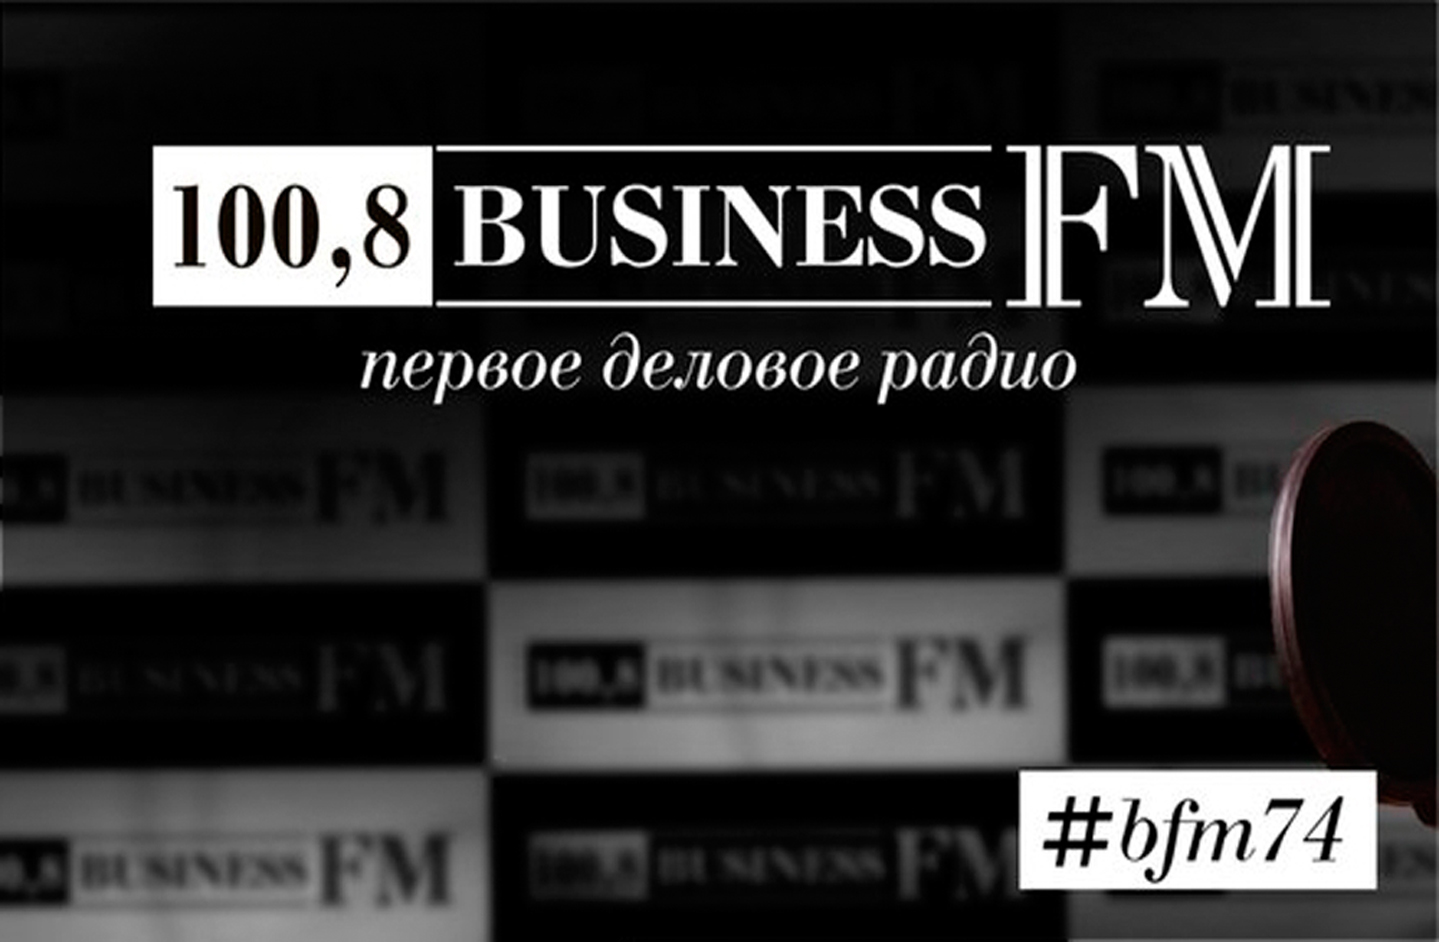 Сайт радио бизнес фм. Радио бизнес. Бизнес fm. Бизнес ФМ логотип. Радиостанция бизнес ФМ.